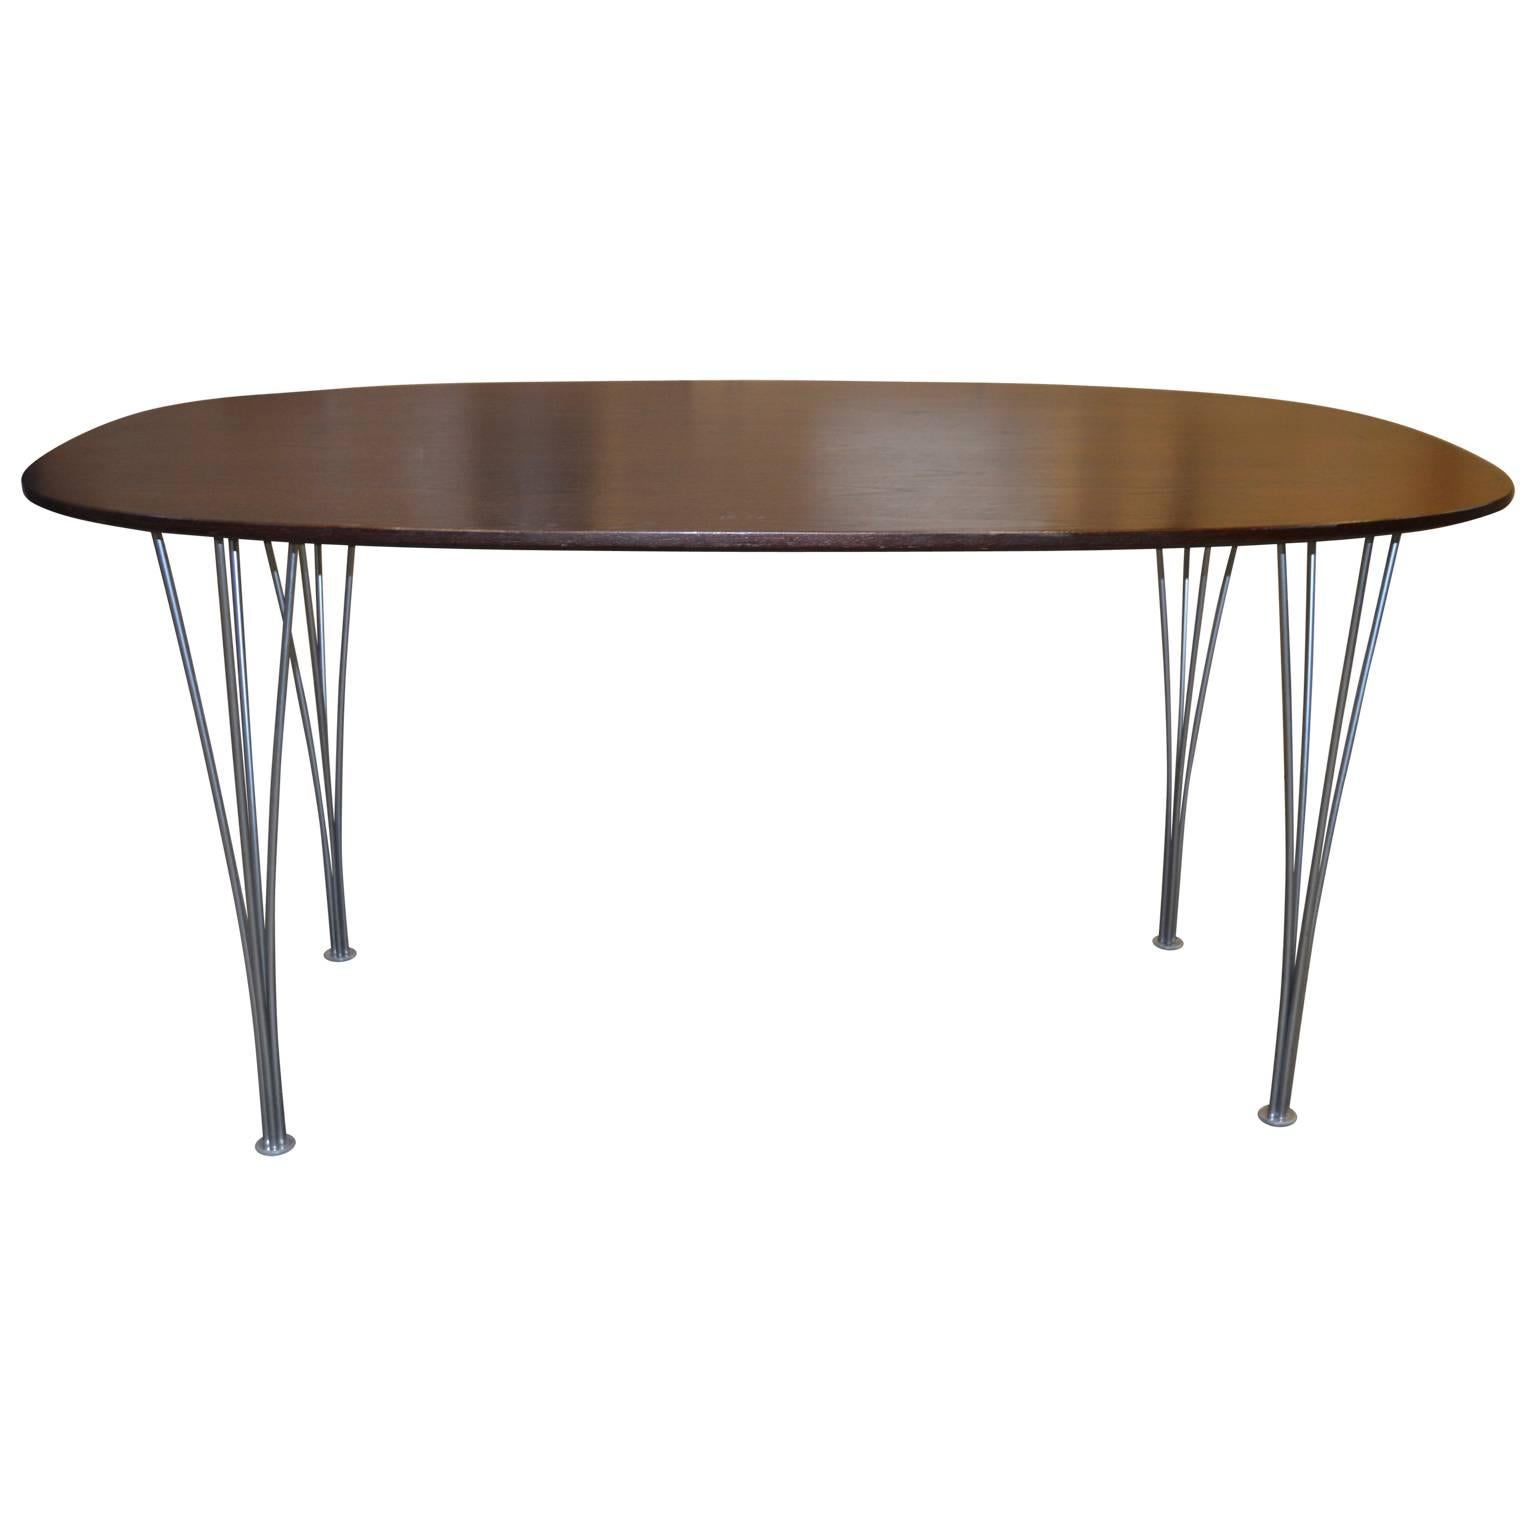 Super Ellipse dining table with chromed steel legs.
Designed by Piet Hein and Bruno Matthsson for Fritz Hansen ,
Denmark 1974 original label to underside.